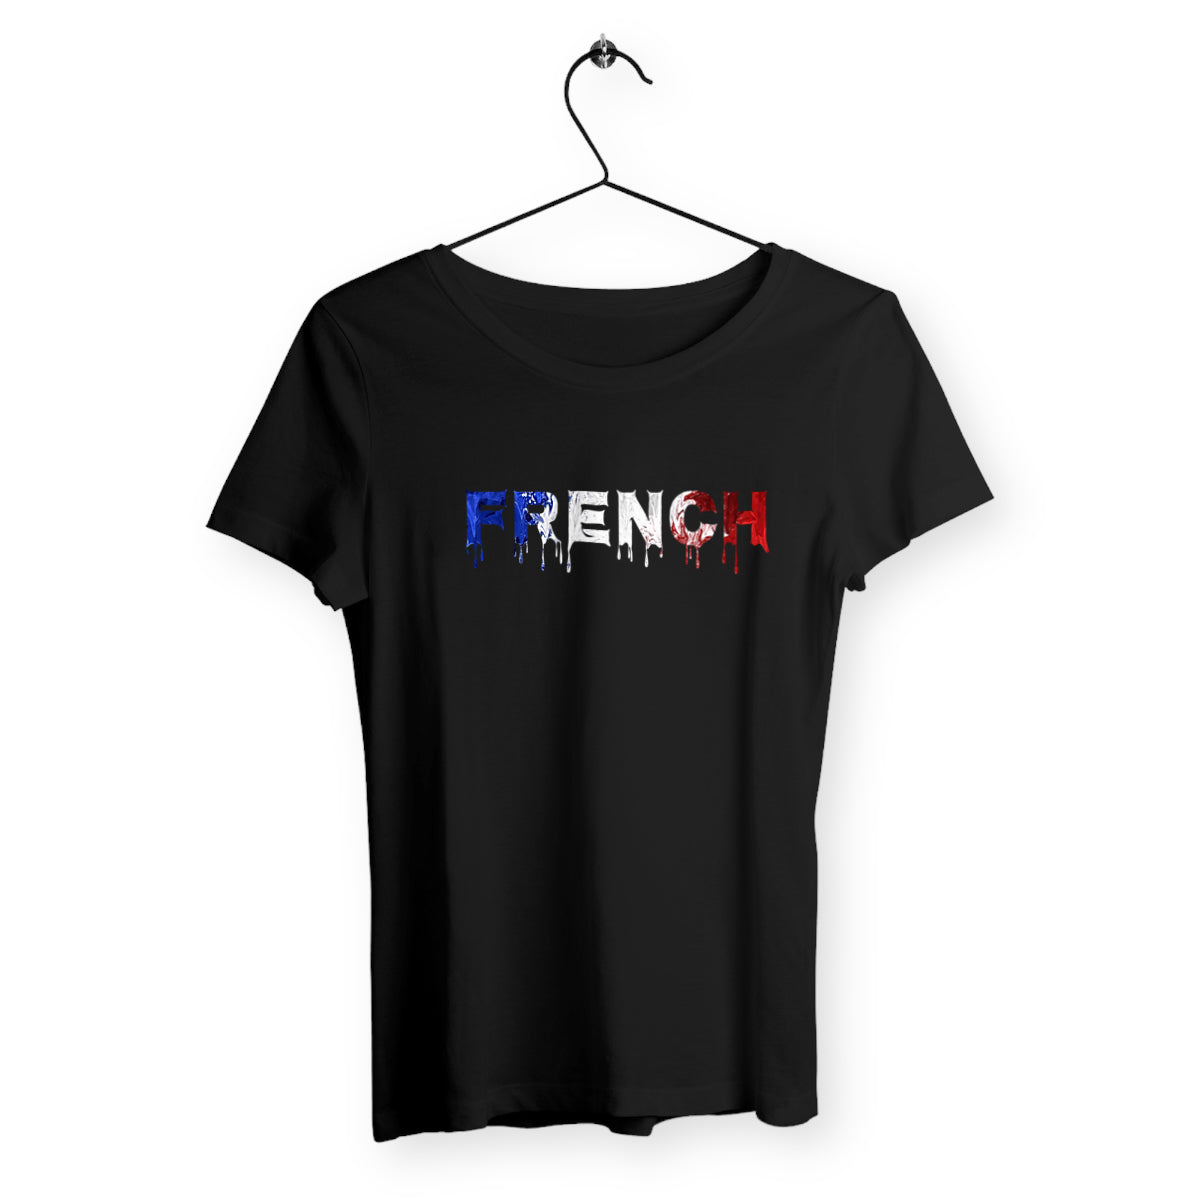 T-Shirt Femme Bio - Peinture French, t-shirt femme coton bio noir peinture french T-French, t-shirt french, t-shirt french touch femme, tee shirt french peinture noir